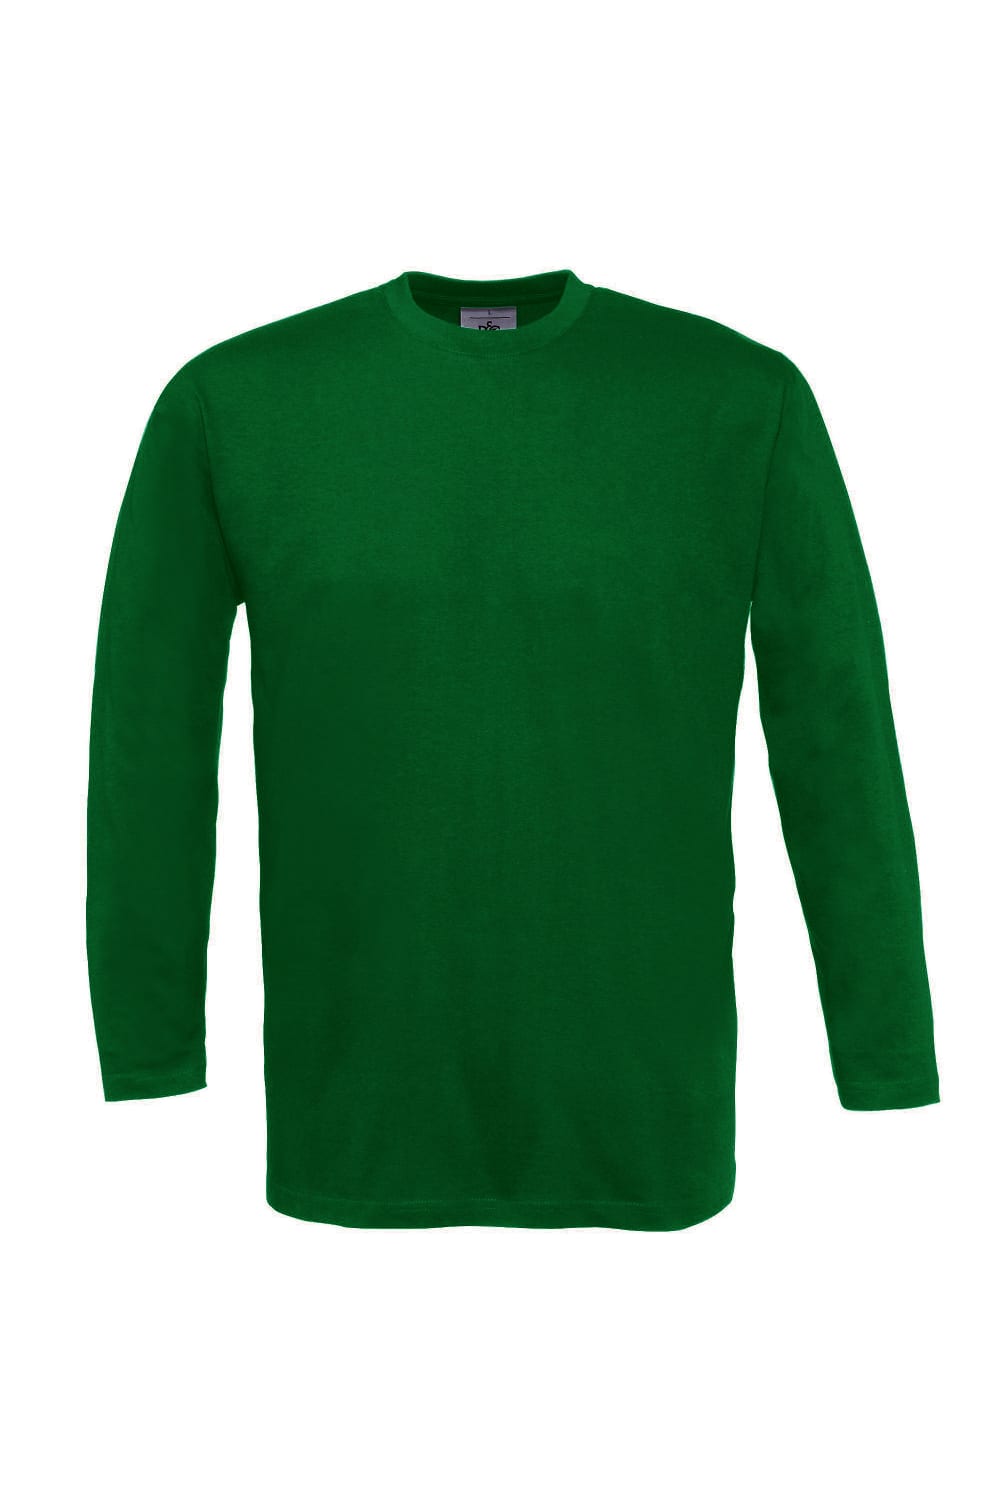 B&C Mens Exact 150 LSL Crew Neck Long Sleeve T-Shirt (Bottle Green)